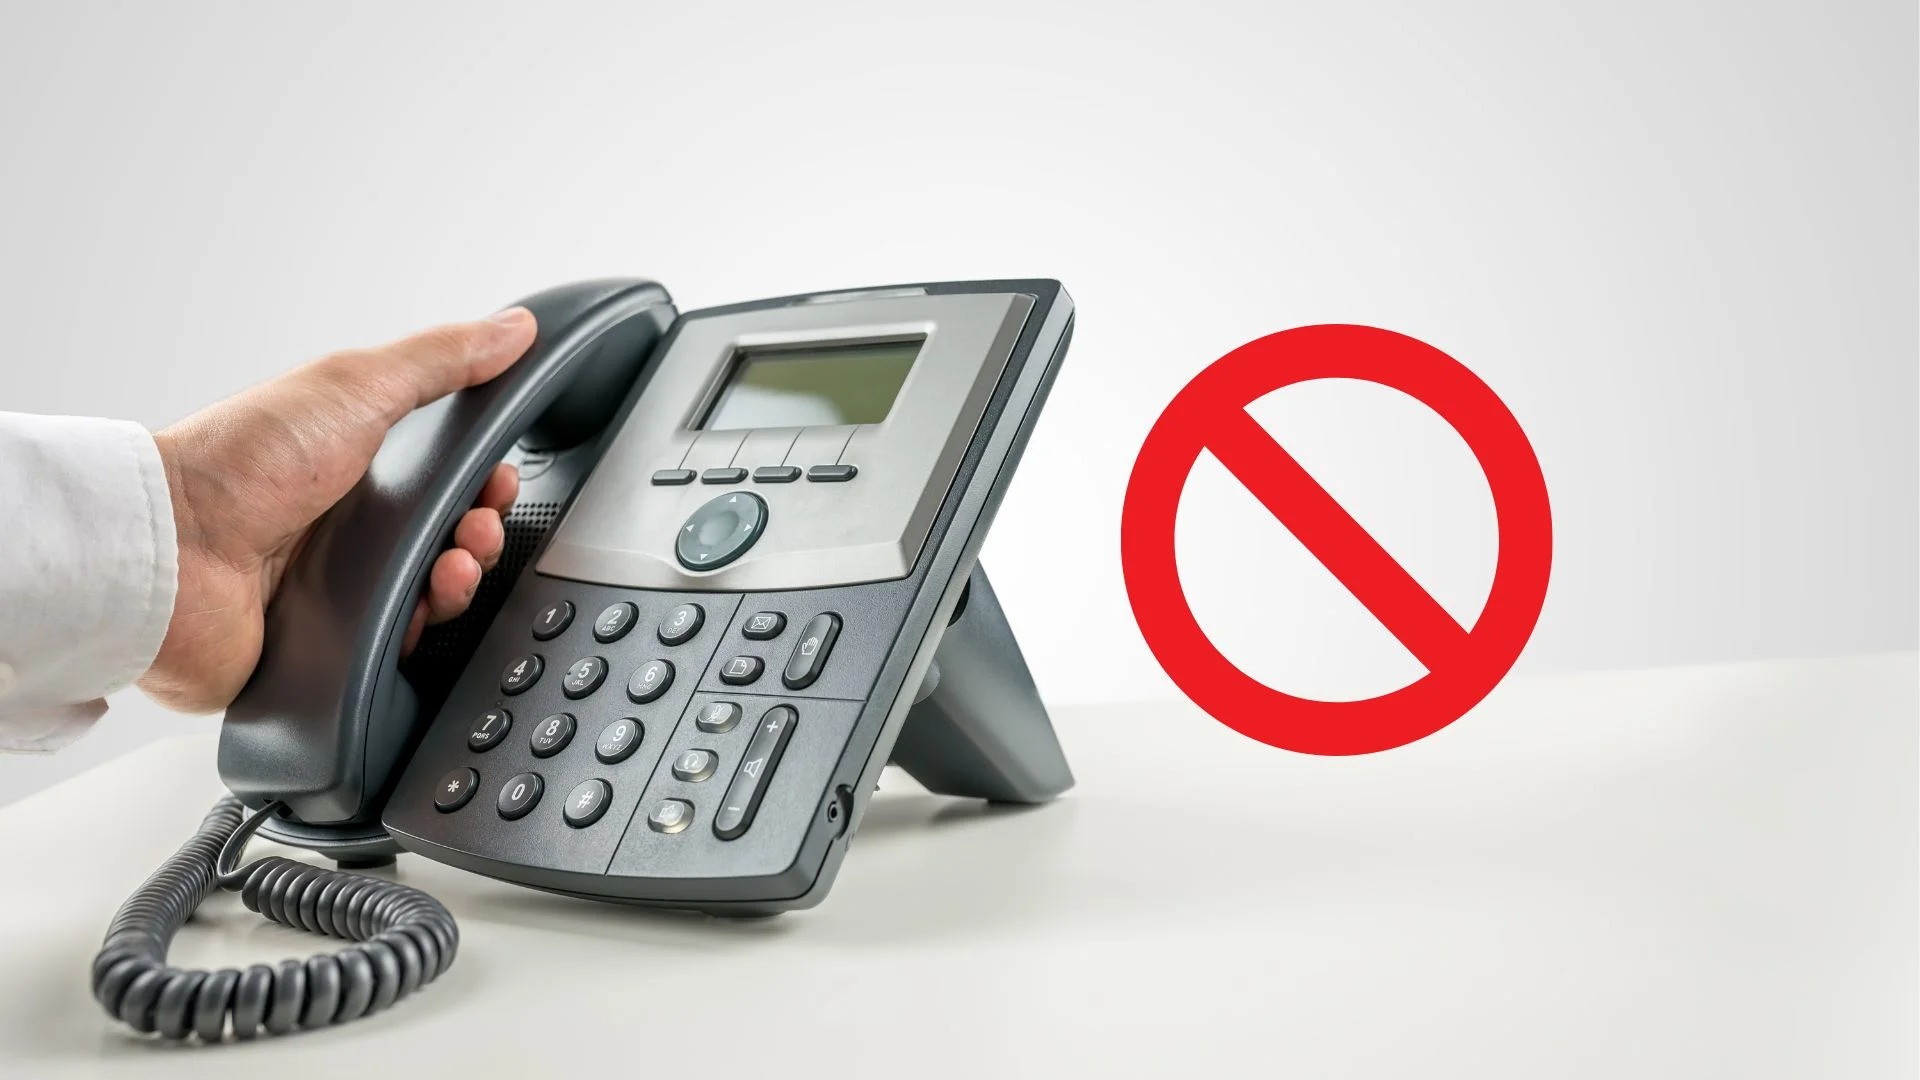 how-to-block-phone-number-on-landline